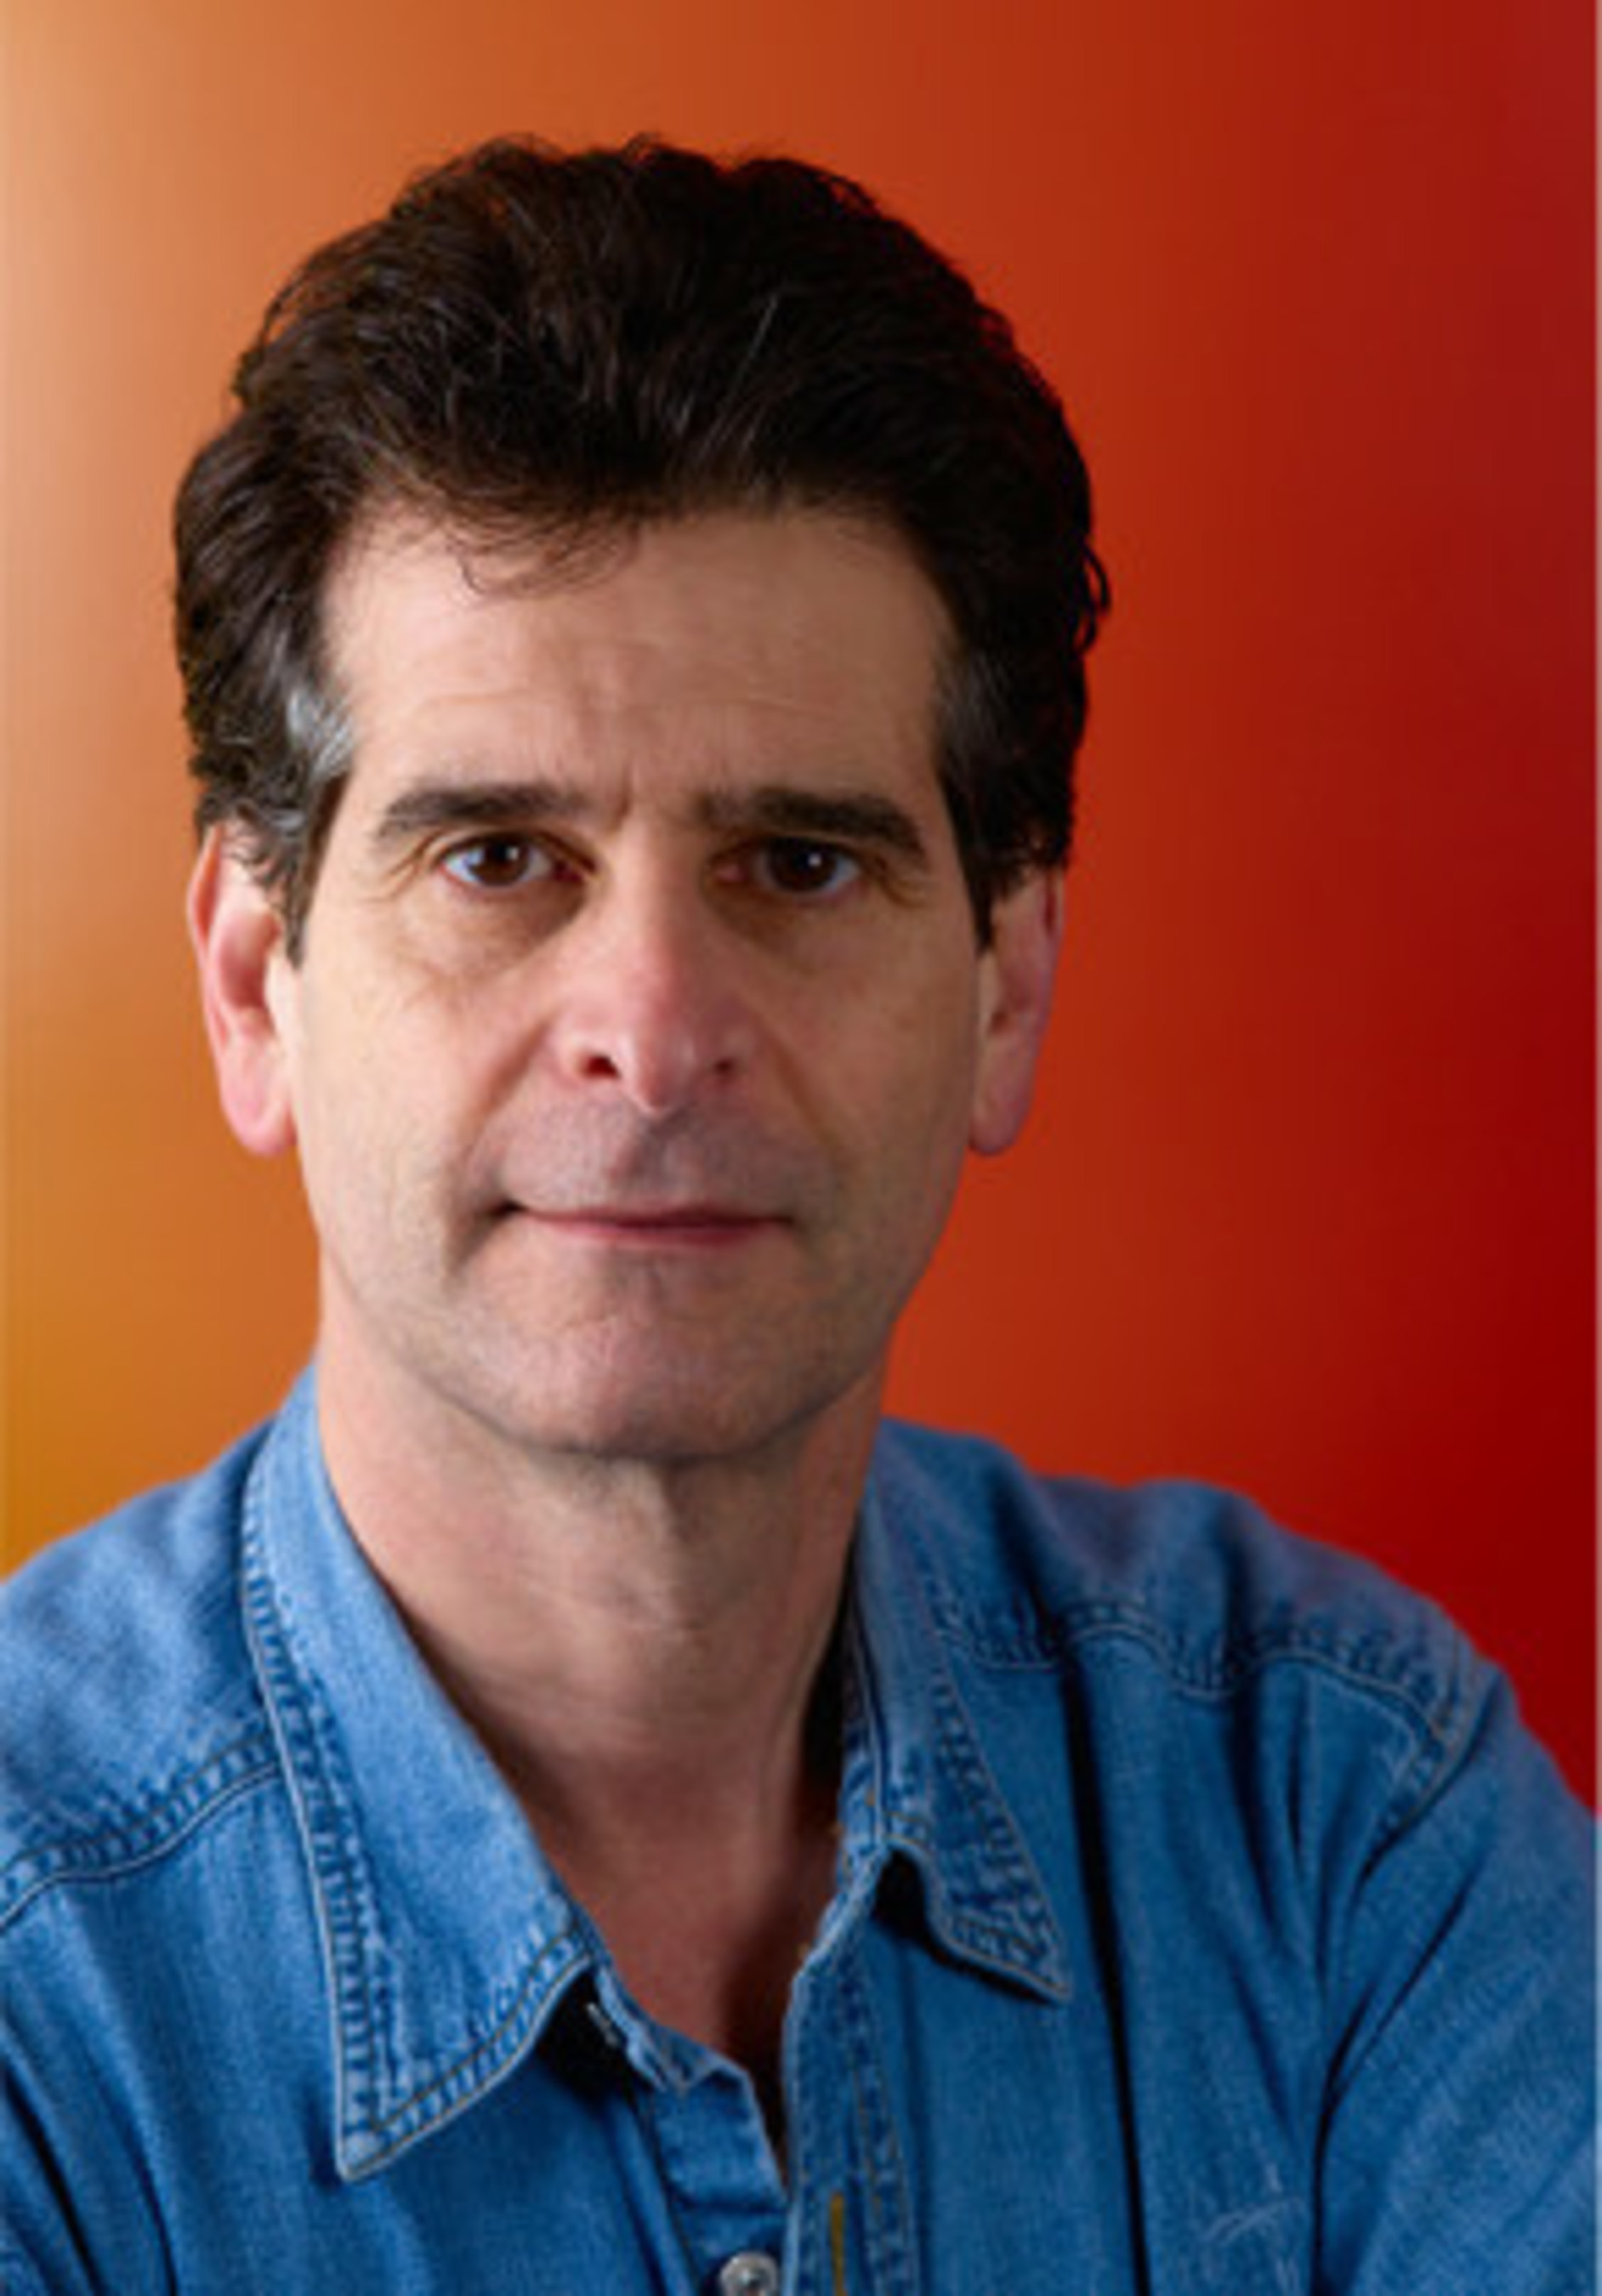 Dean Kamen speaks on The Luke Arm at Boston event May 6, 2015